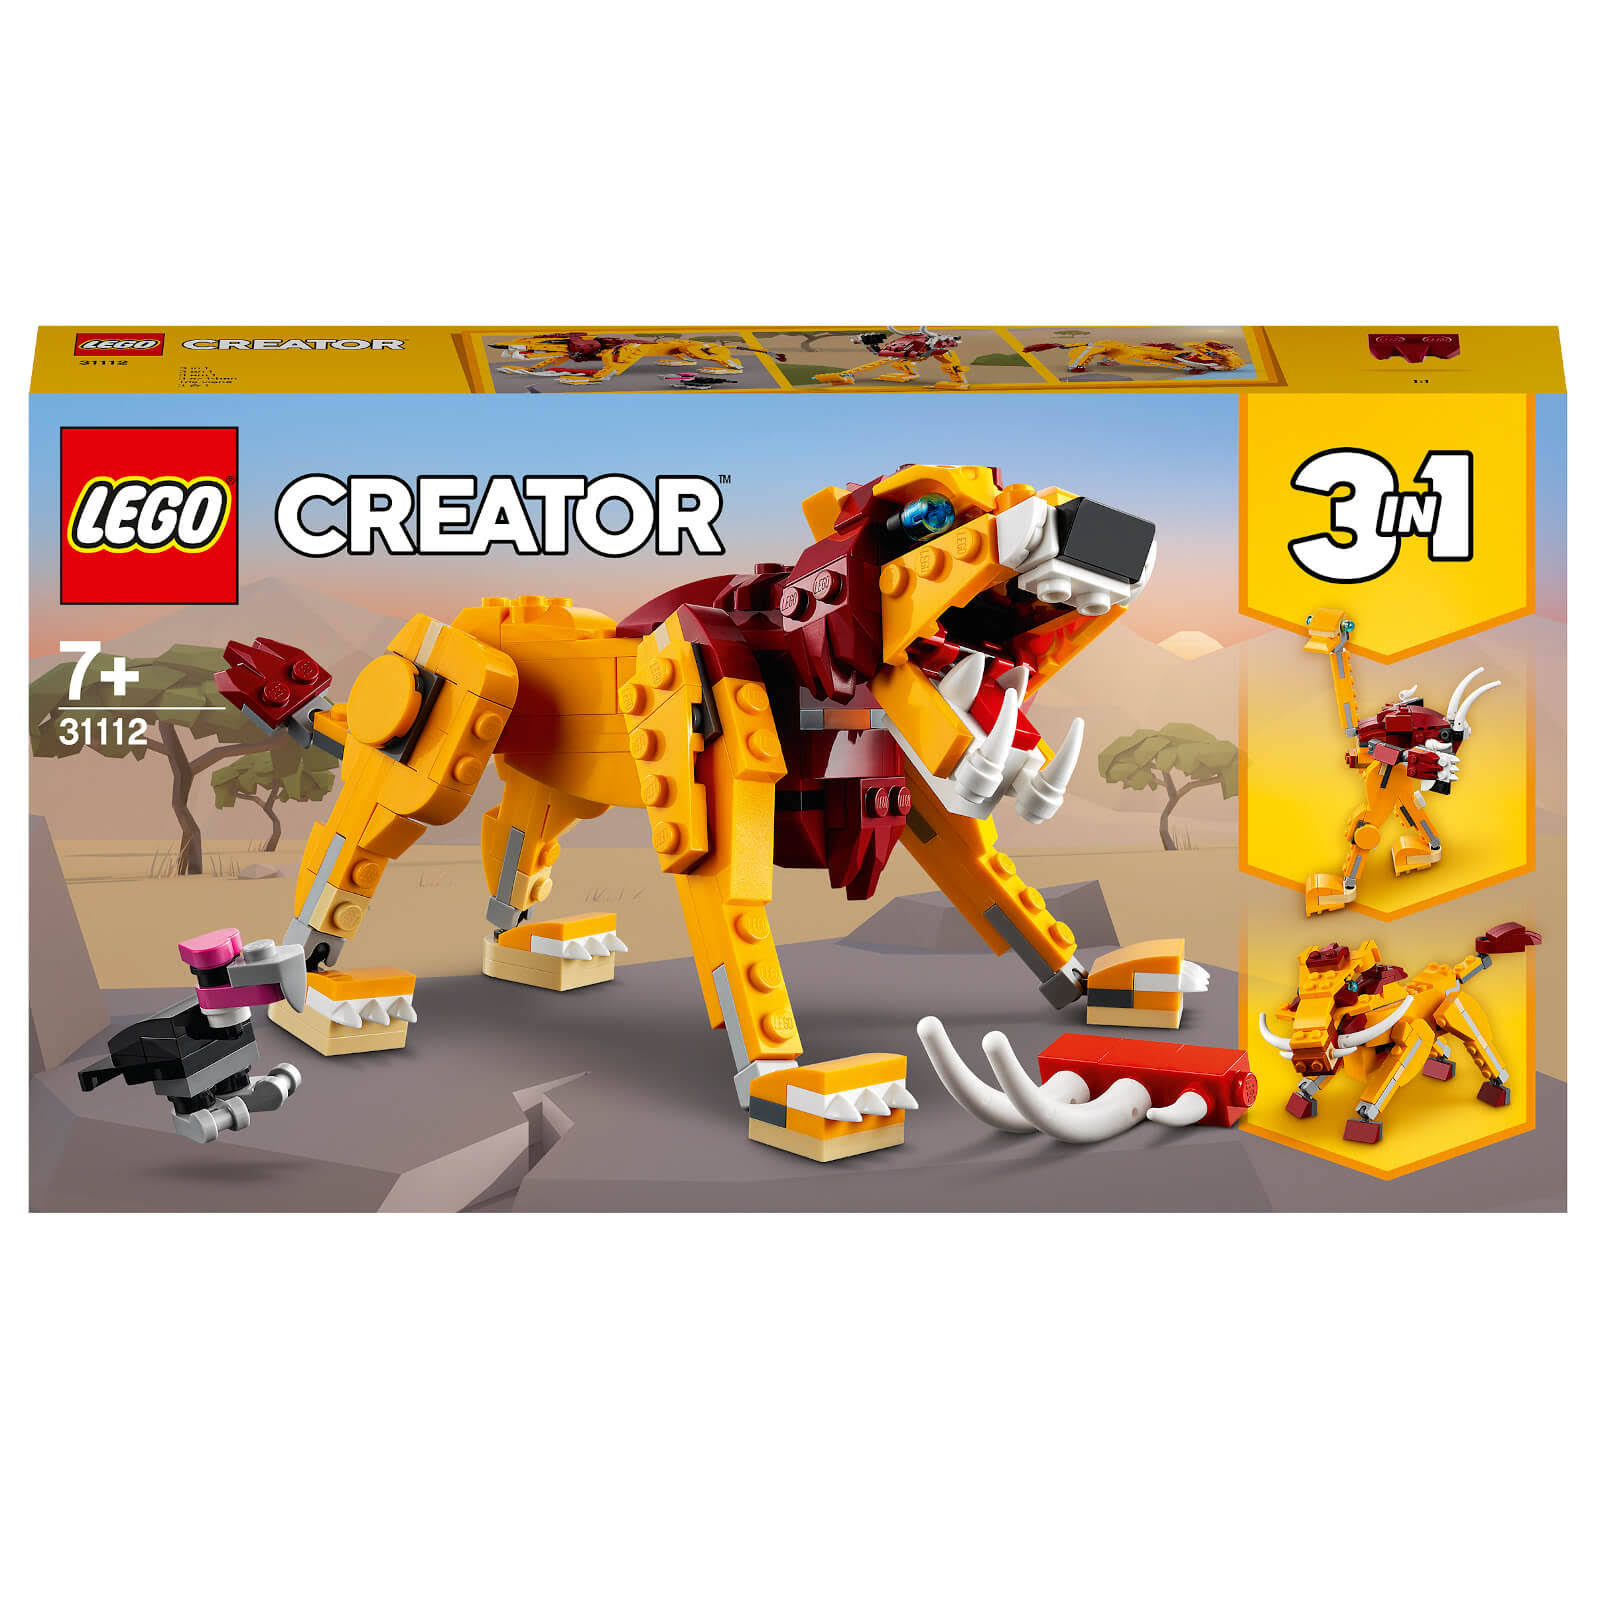 Lego Creator Building Toy, Wild Lion, 224 Pieces, 7+